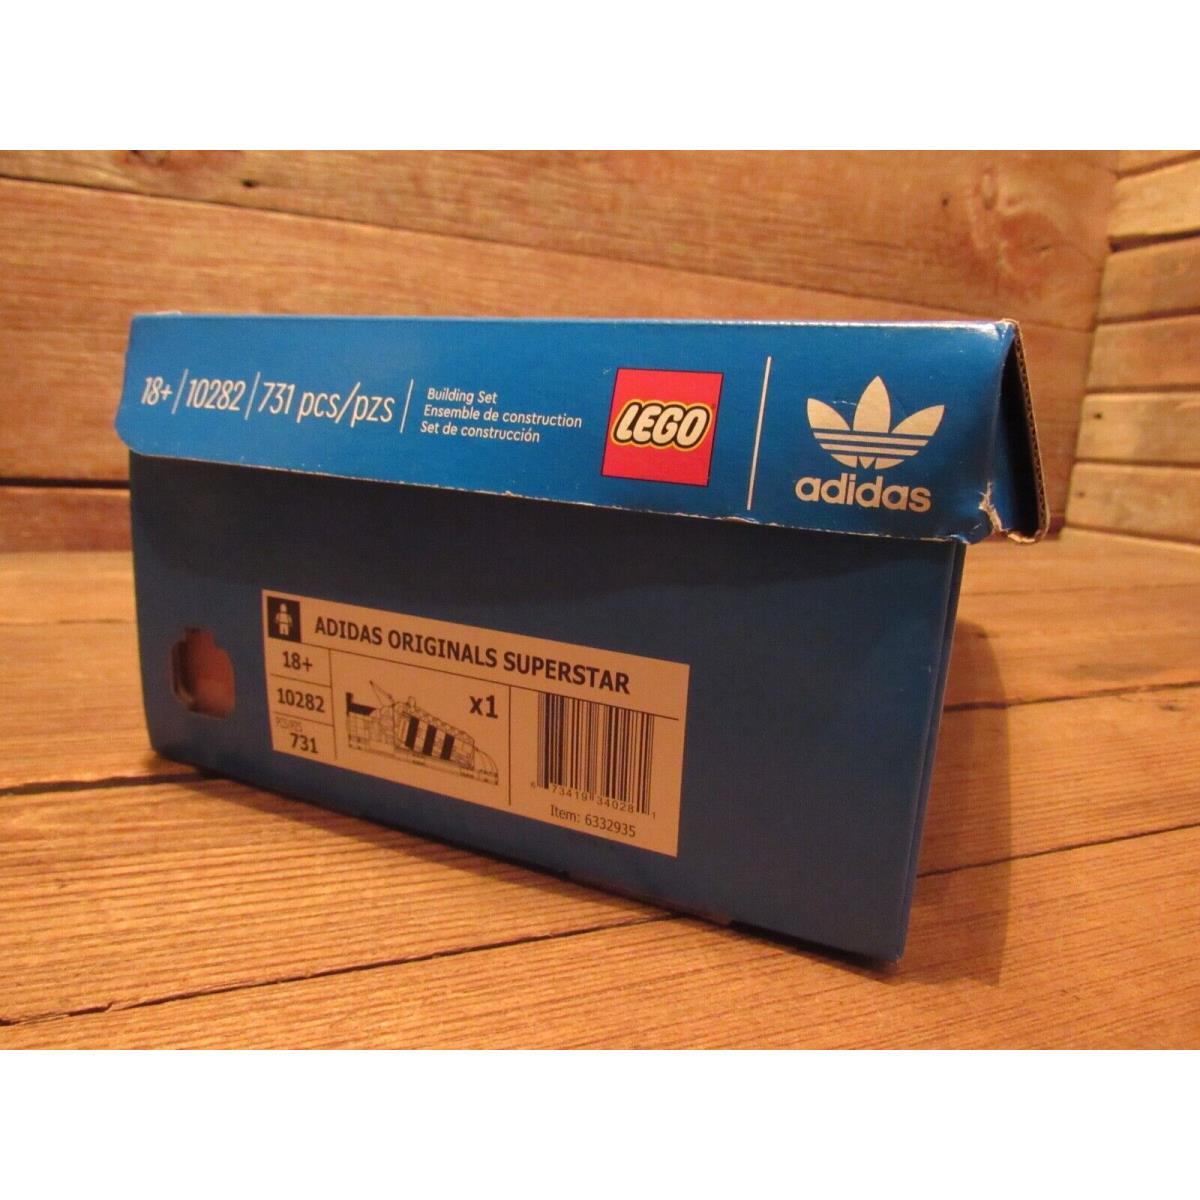 Lego Adidas Originals Superstar Icons Set 10282 731 Pcs - Retired